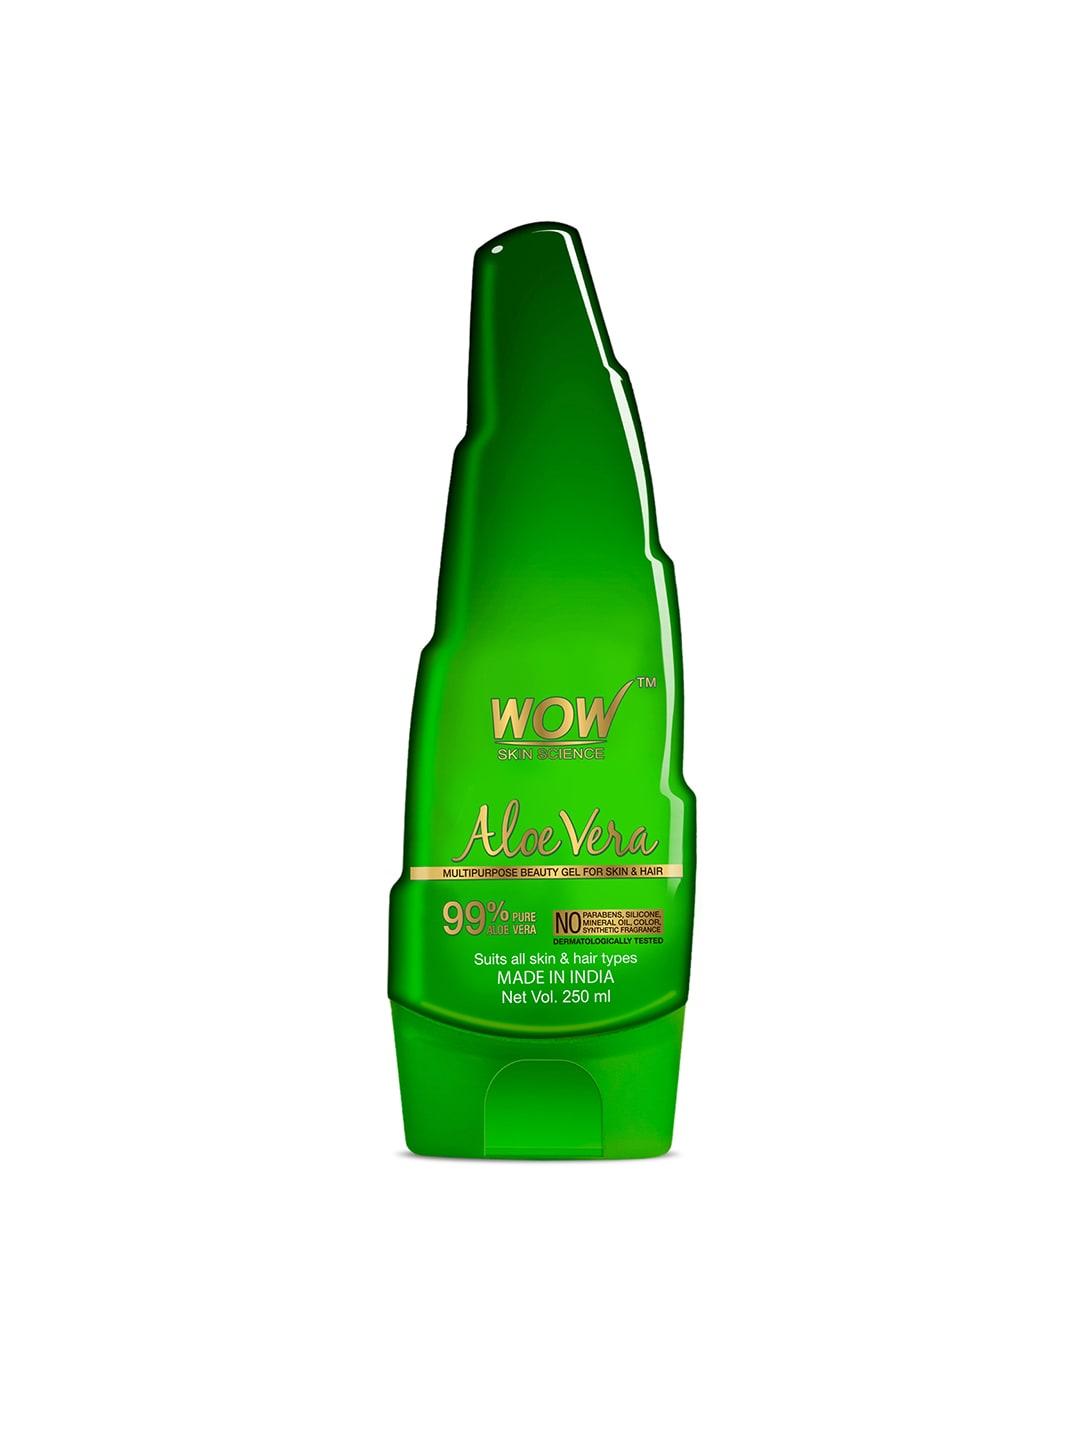 wow skin science 99% pure aloe vera gel for skin and hair - 250 ml